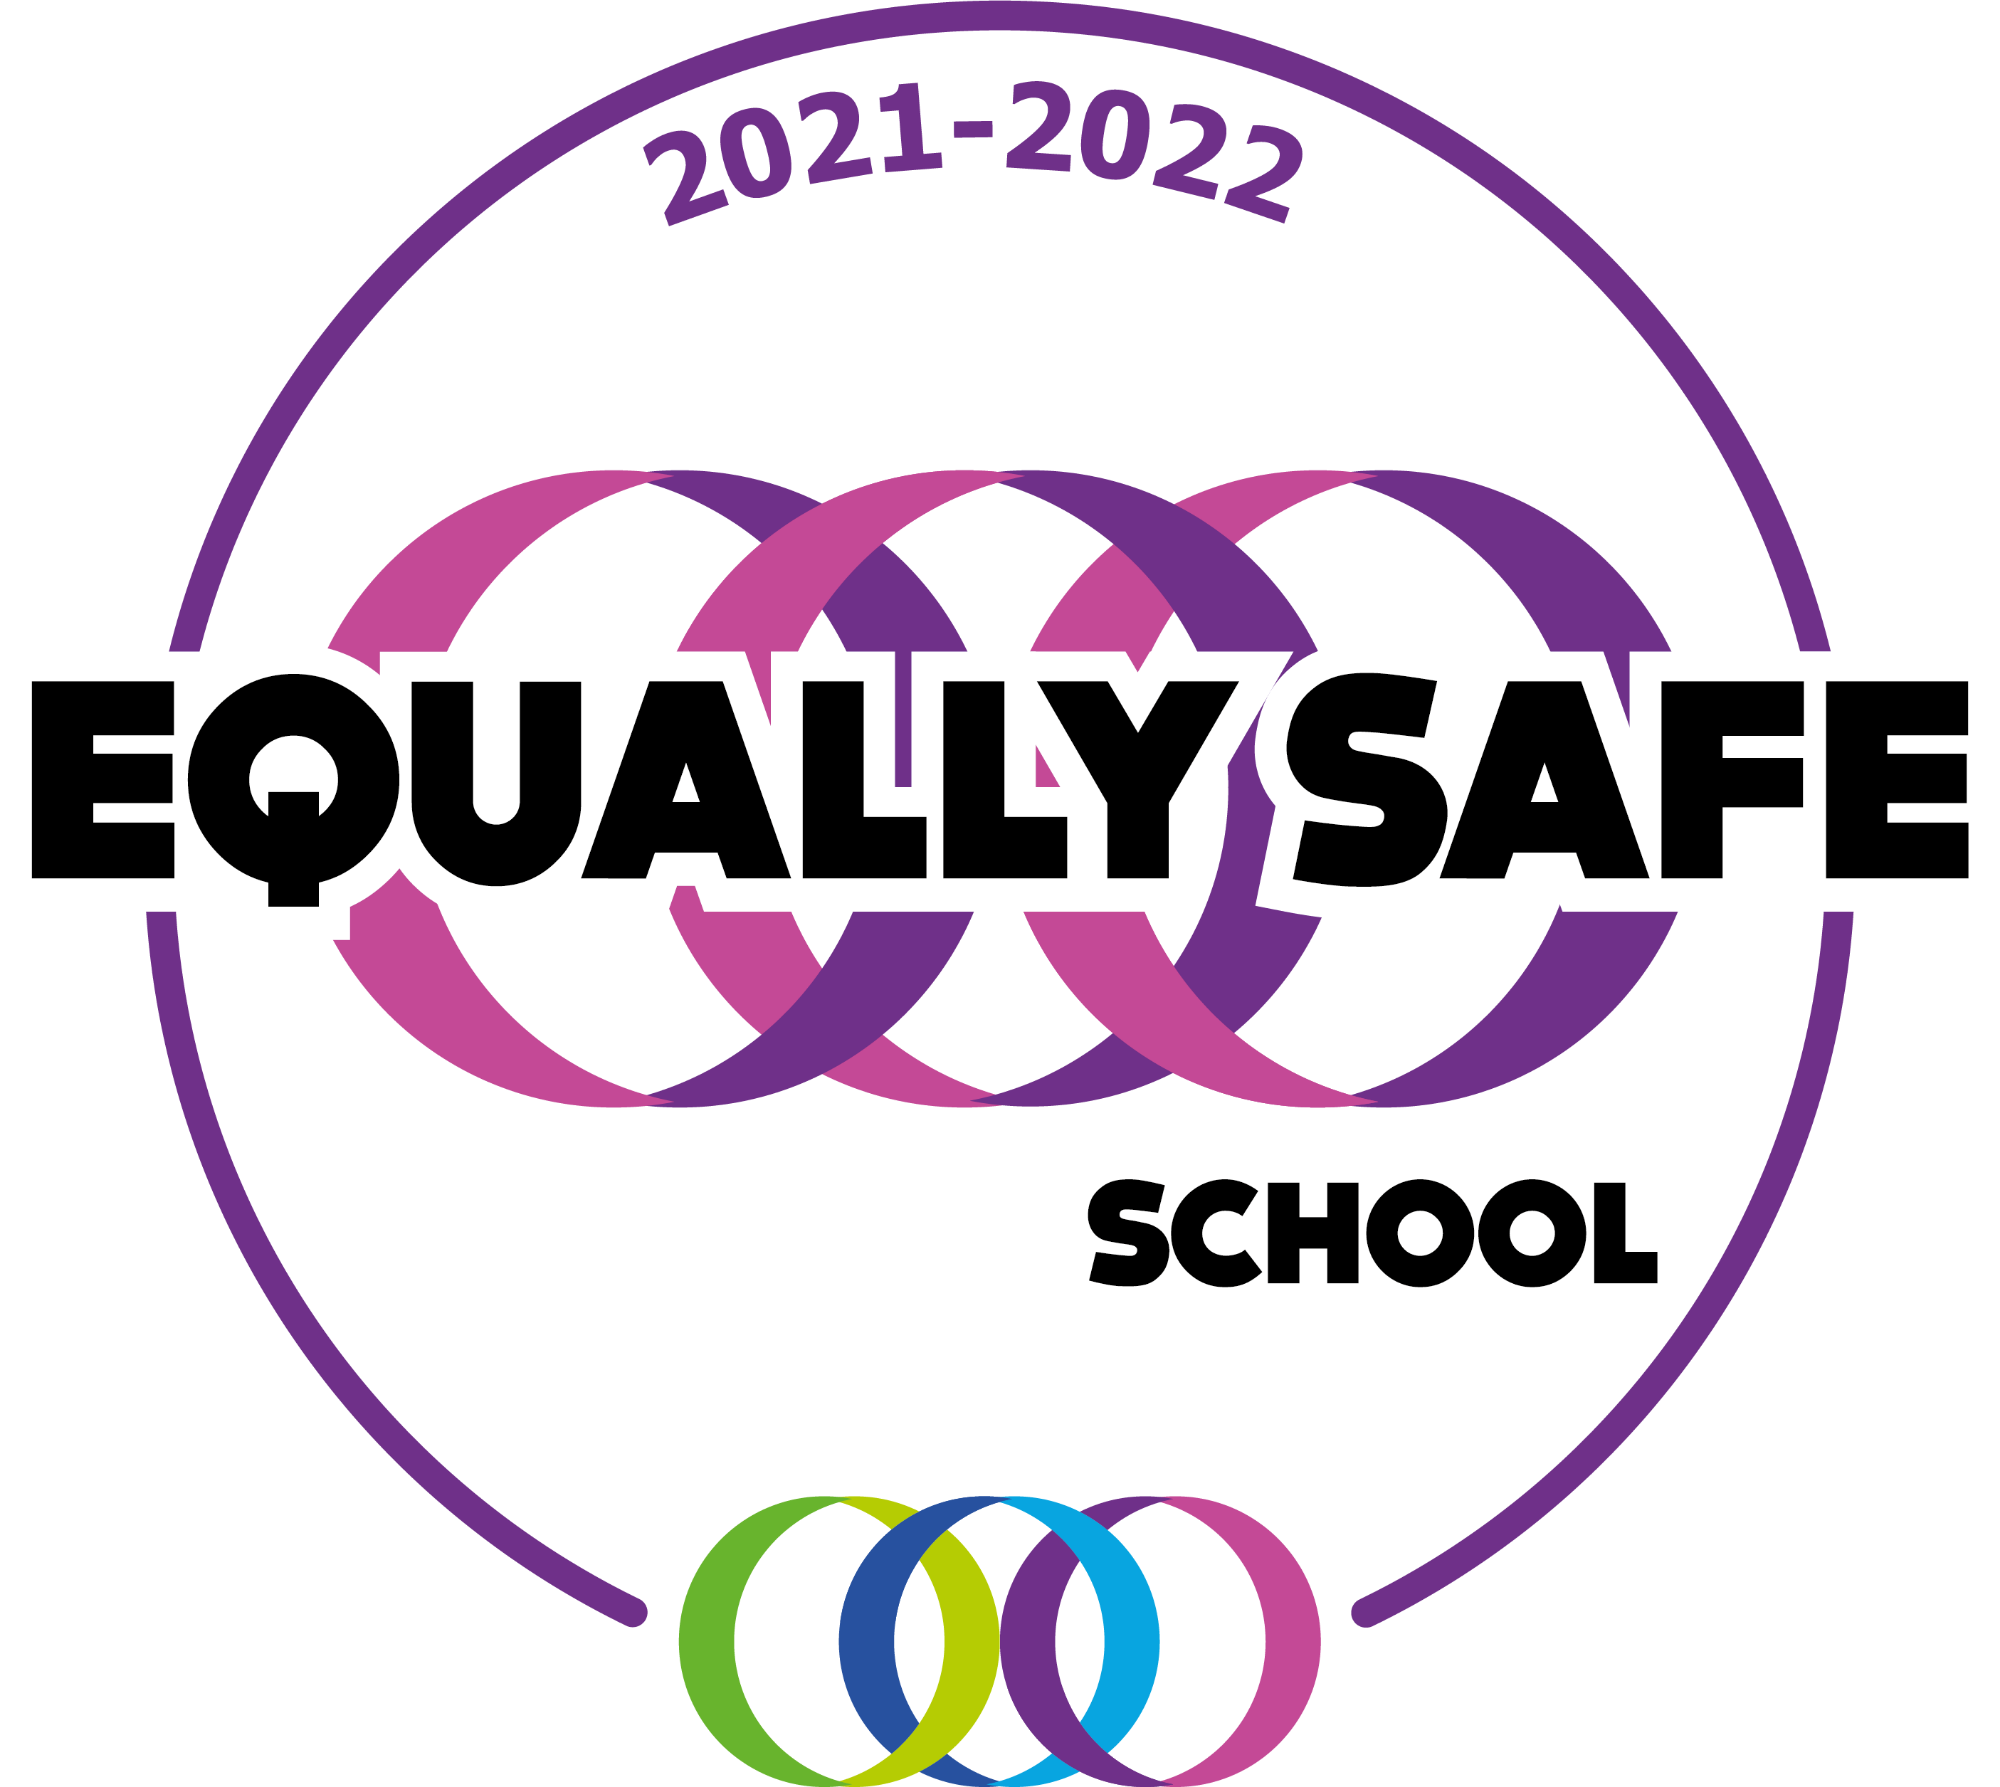 EqualiTeach Equally Safe School